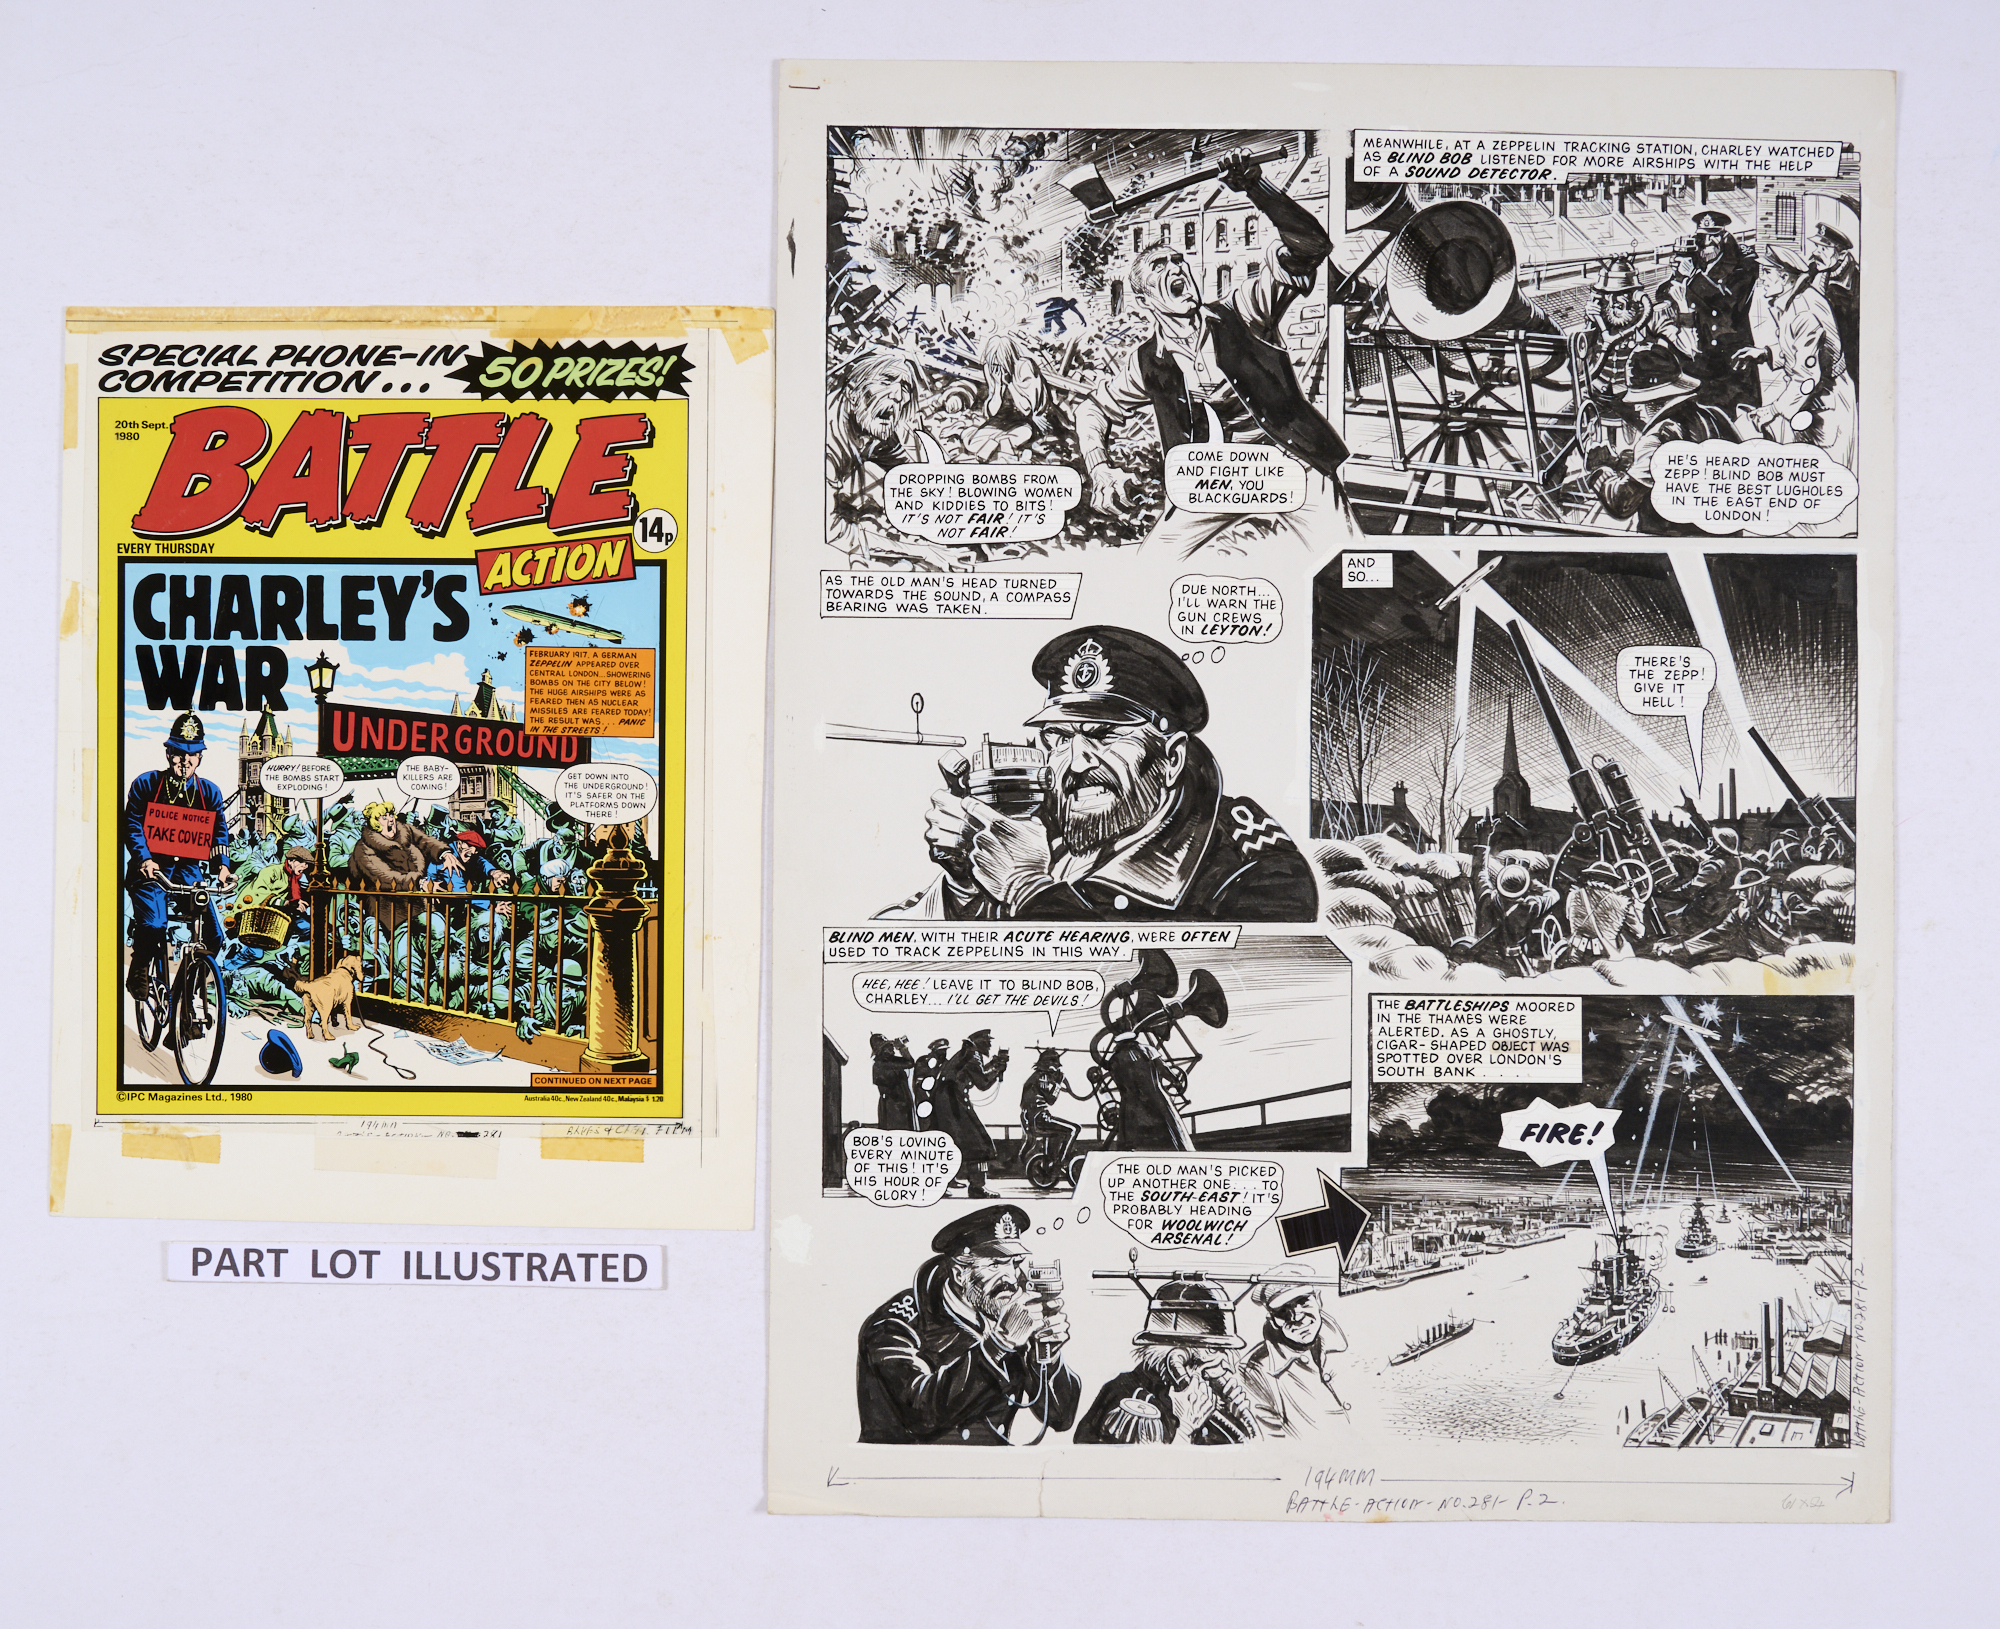 Charley's War: 3 original consecutive artworks (1980) by Joe Colquhoun for Battle-Action 281, pgs